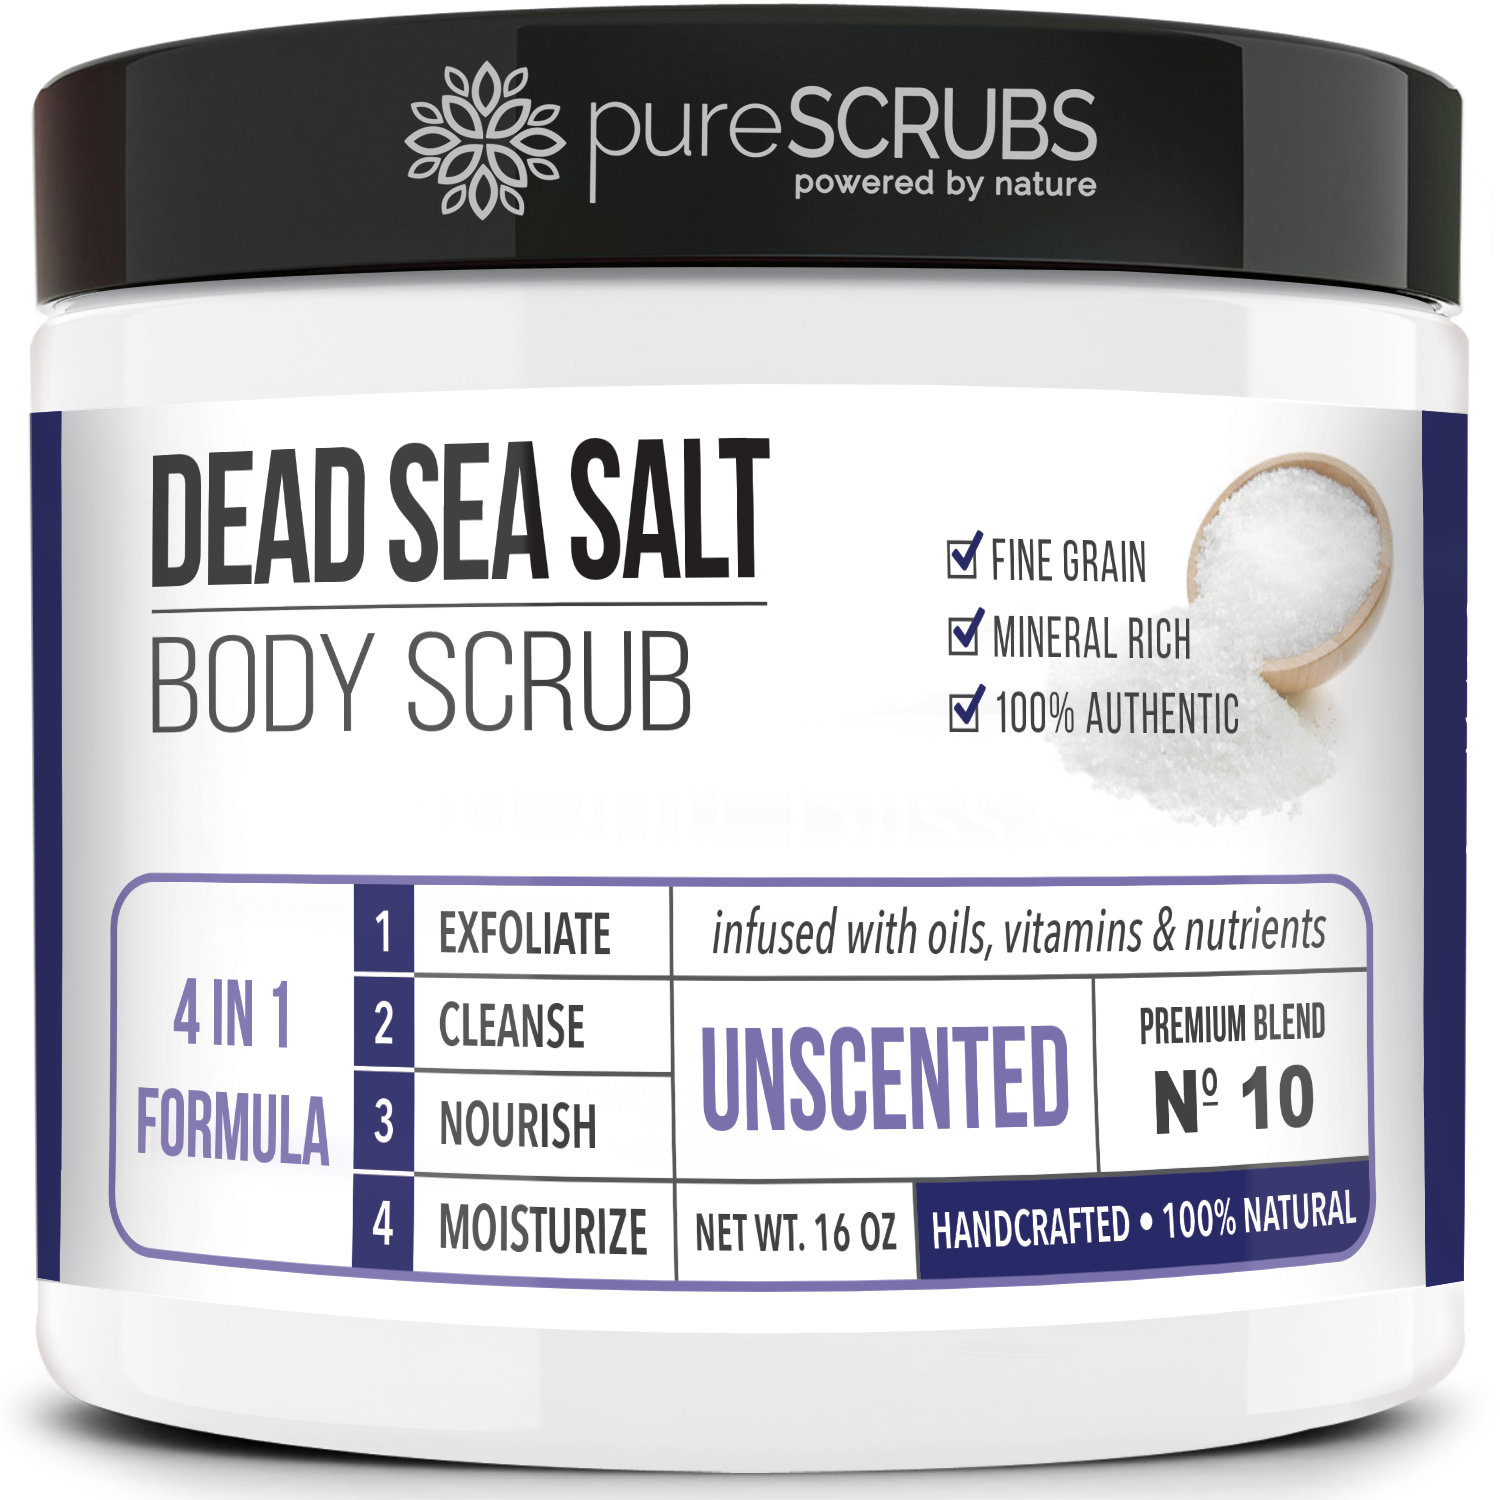 Unscented Body Scrub / Dead Sea Salt / Premium Blend #10